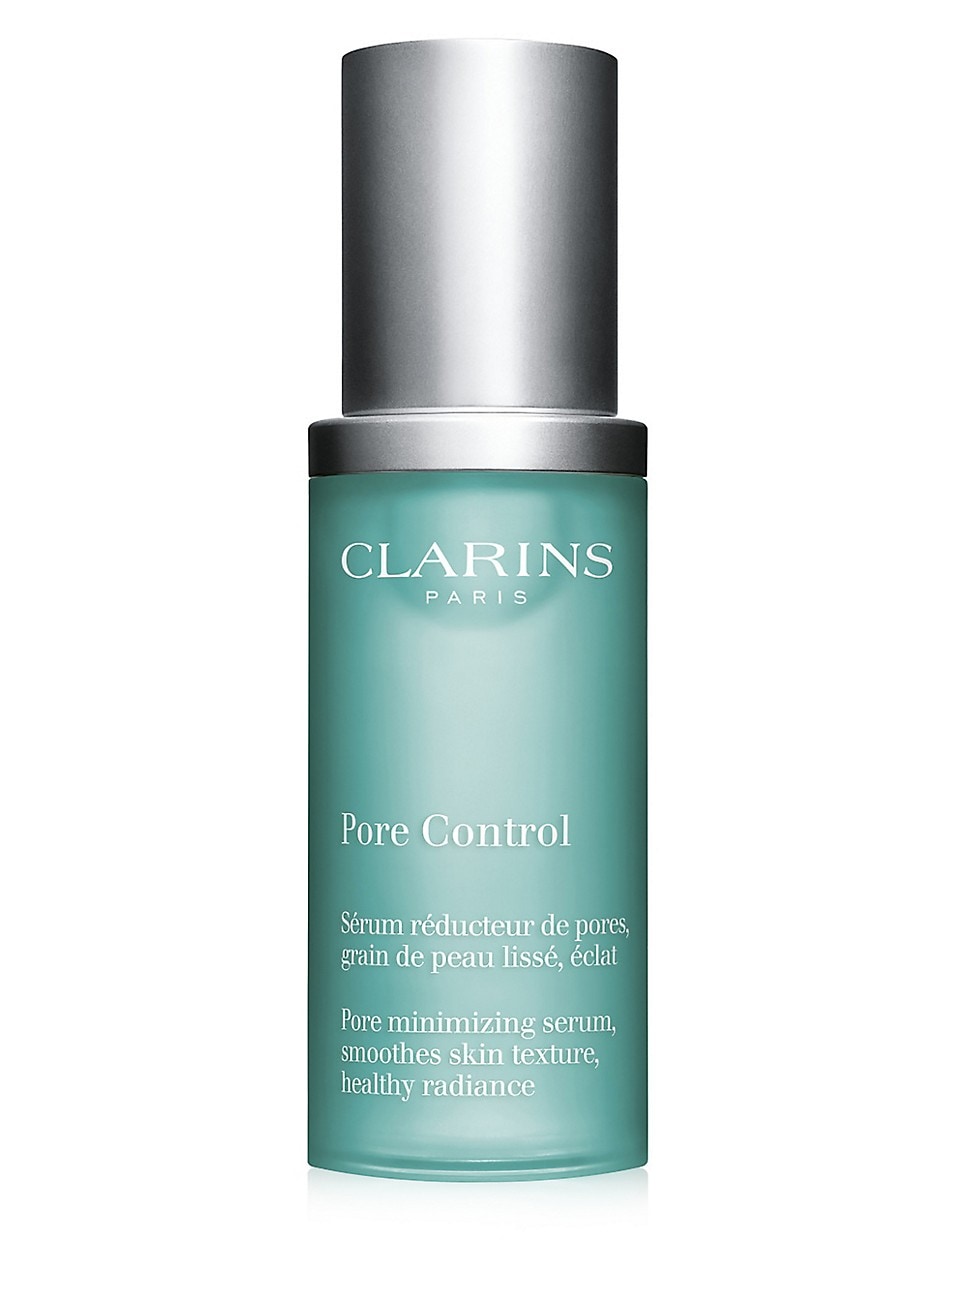 Clarins Pore Control Mattifying and Minimizing Serum